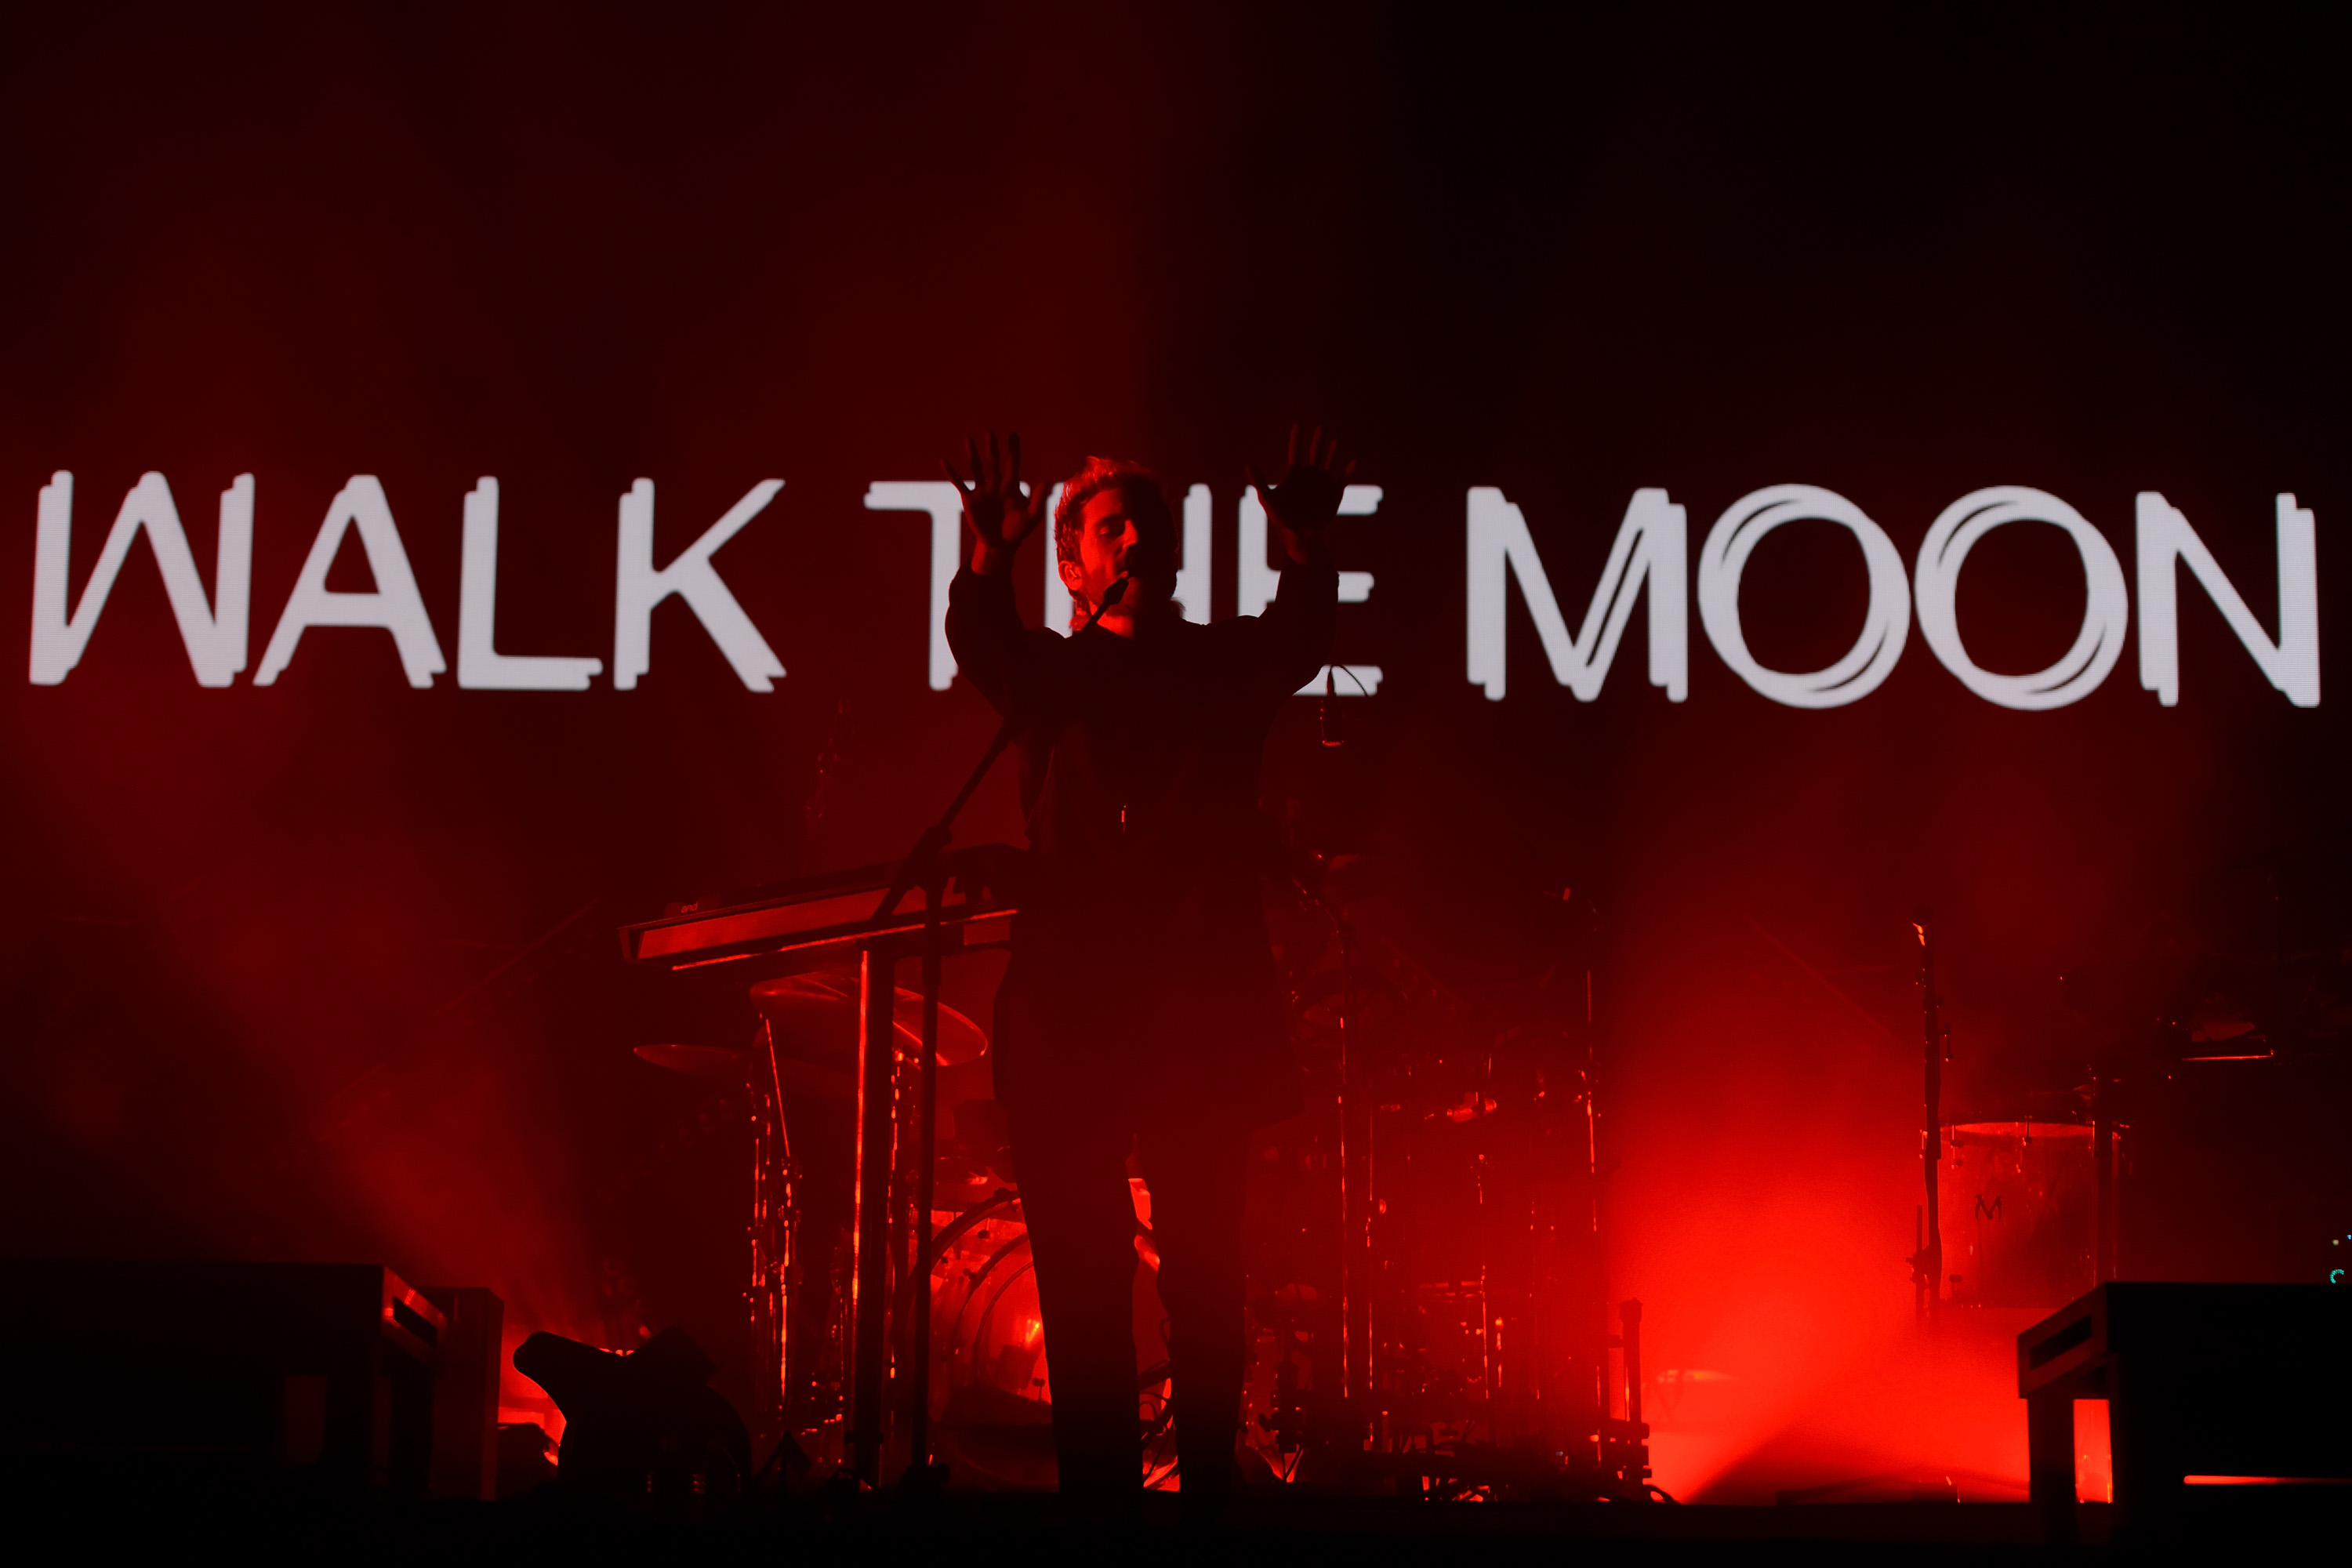 walk the moon album 2014